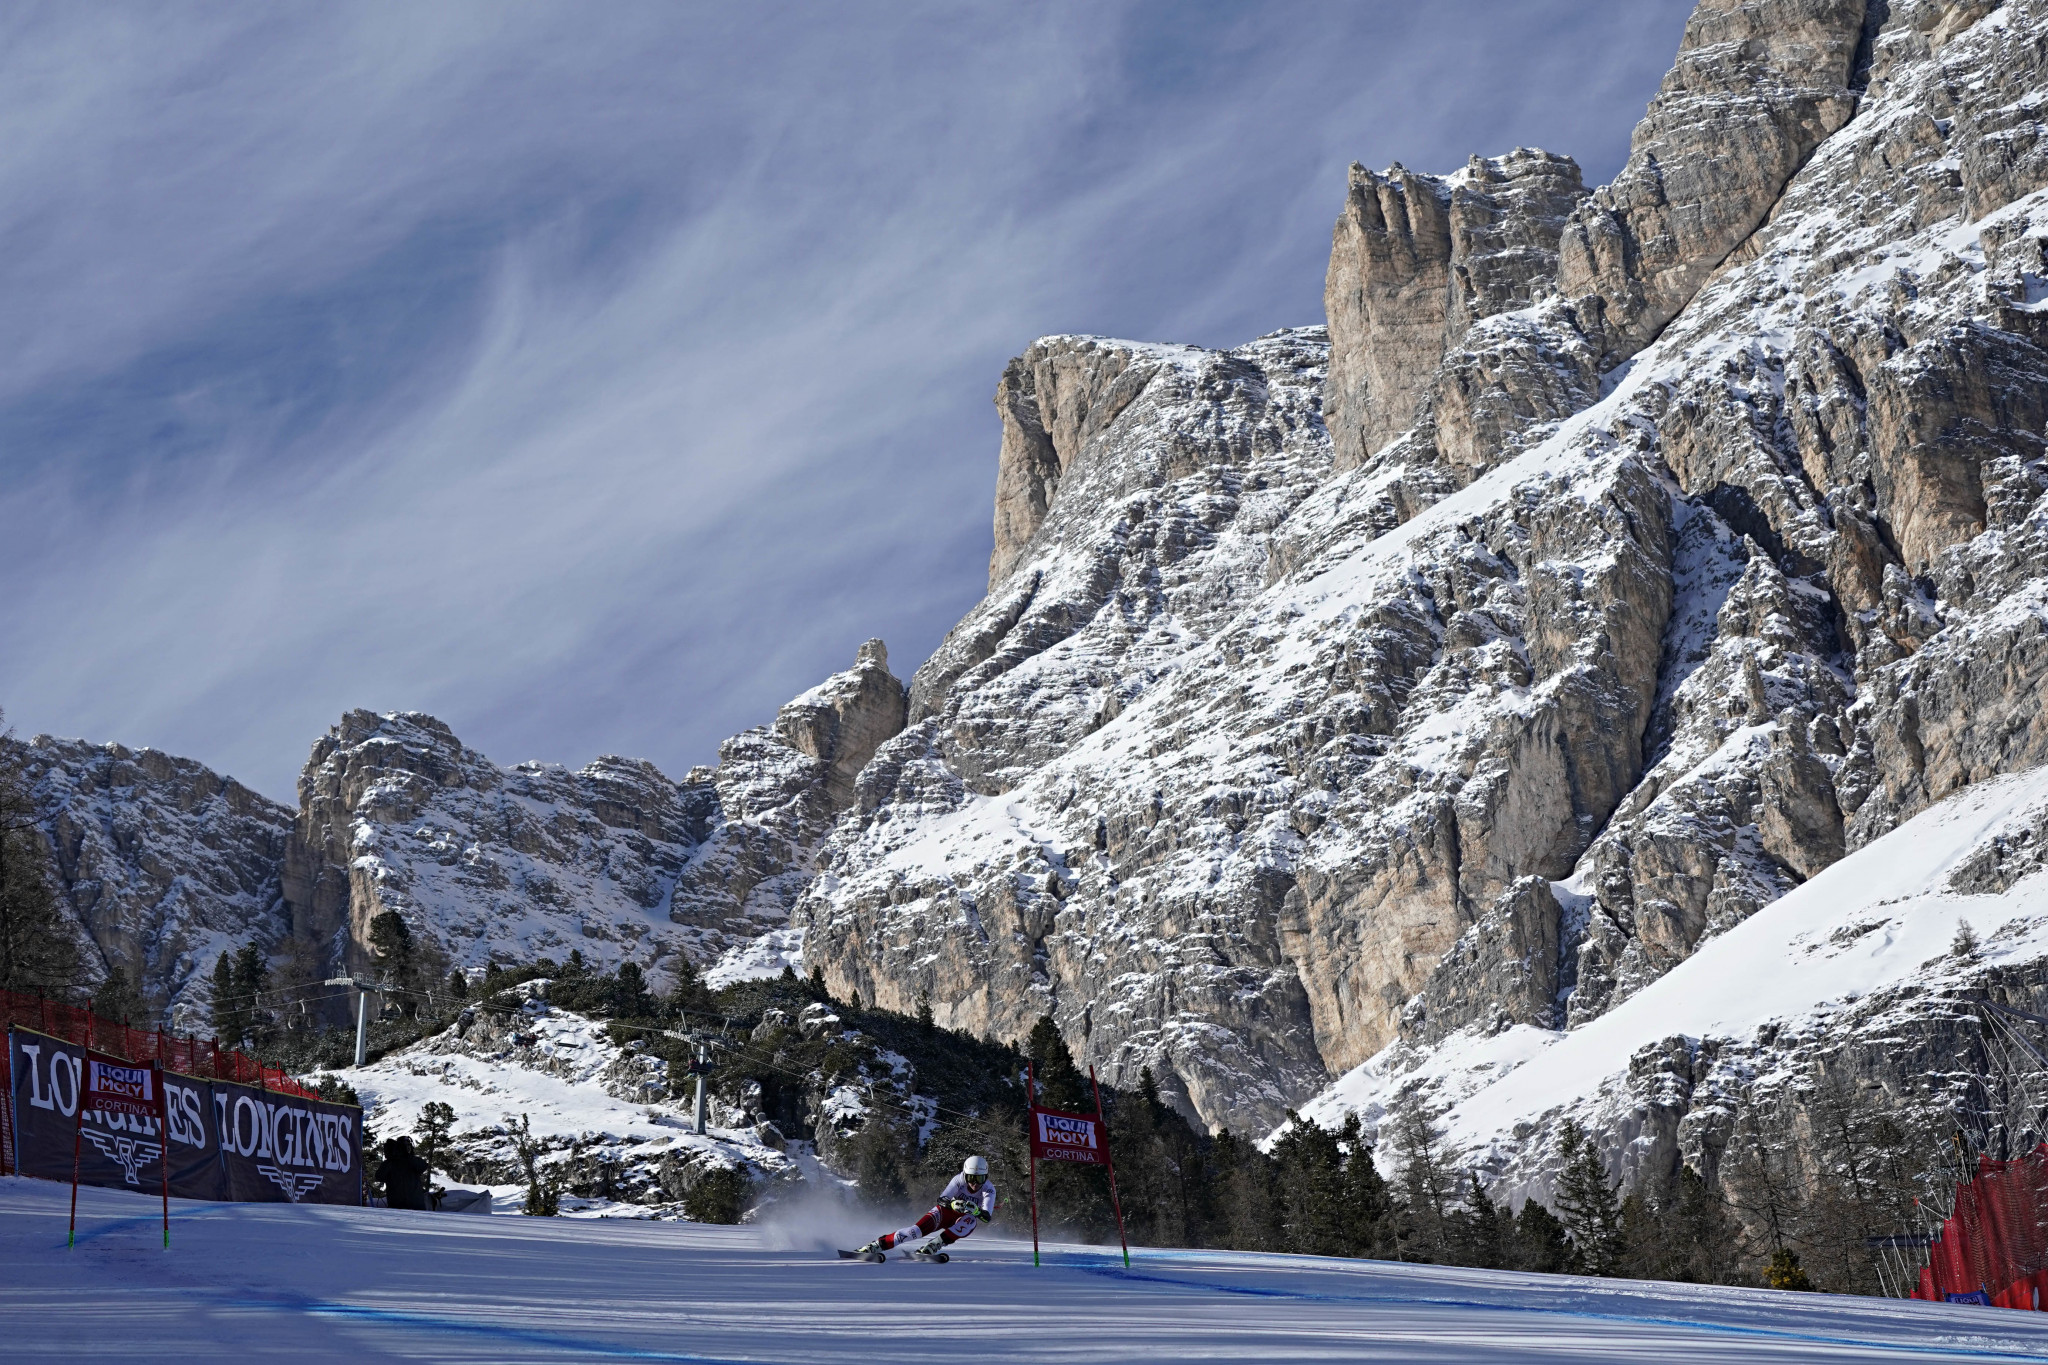 FIS inspect preparations for 2021 Alpine World Ski Championships